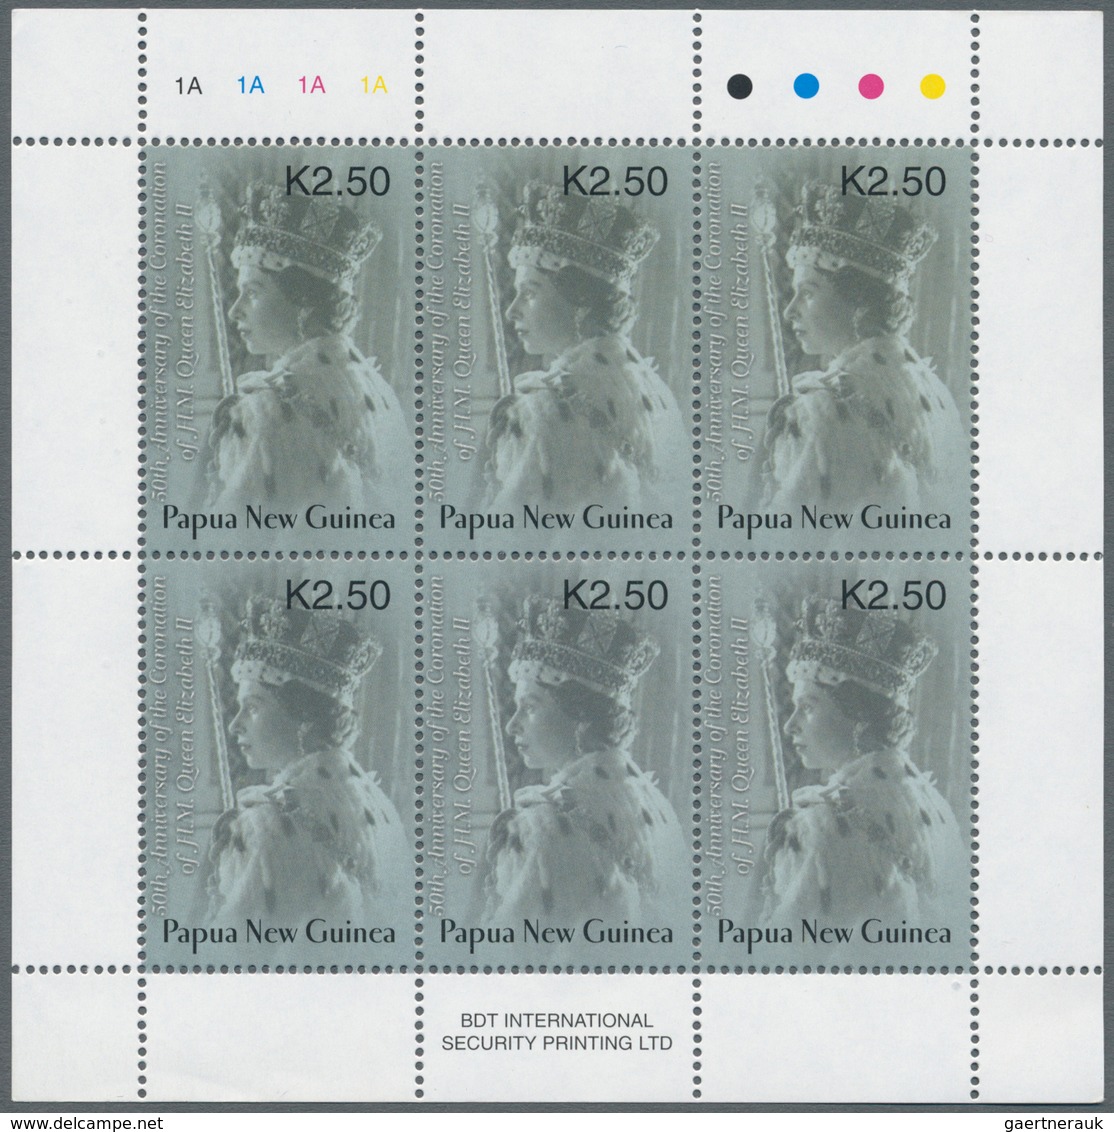 Thematik: Königtum, Adel / Royalty, Nobility: 2003, Papua New Guinea. Lot Of 3,000 Stamps "2.50k Que - Familias Reales